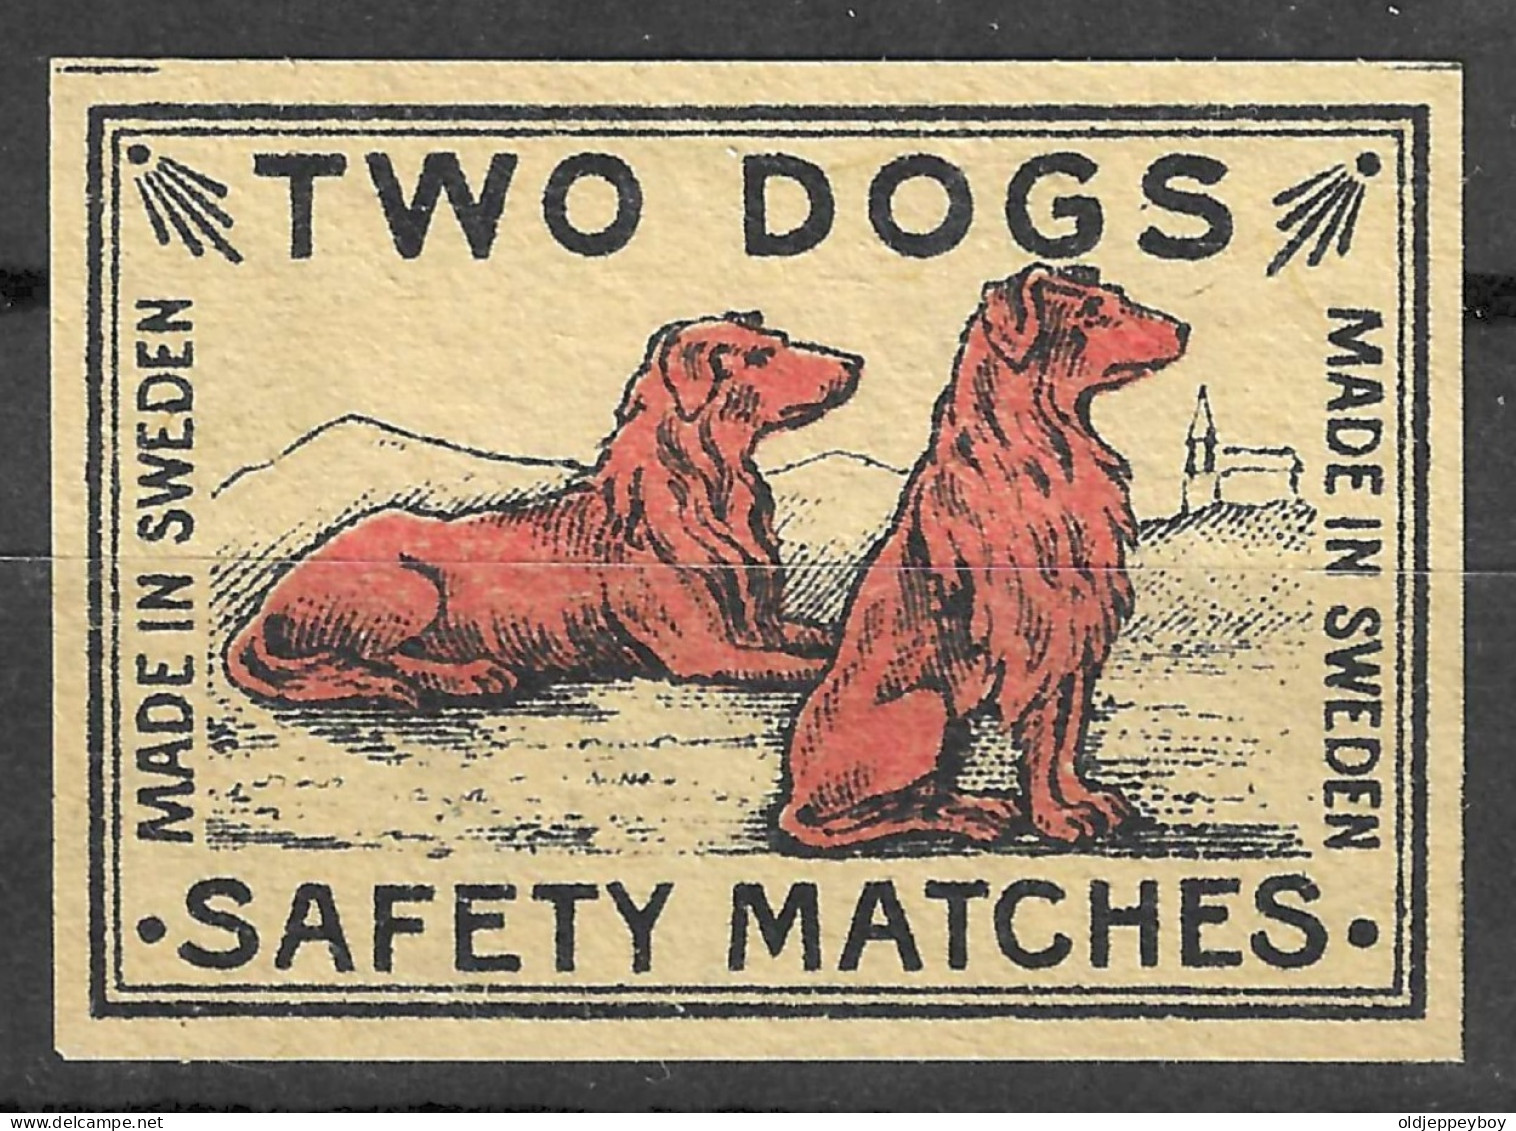 MADE IN SWEDEN VINTAGE Phillumeny MATCHBOX LABEL TWO DOGS Vintage 1930s-40s   5.5  X 3.5 CM  RARE - Cajas De Cerillas - Etiquetas